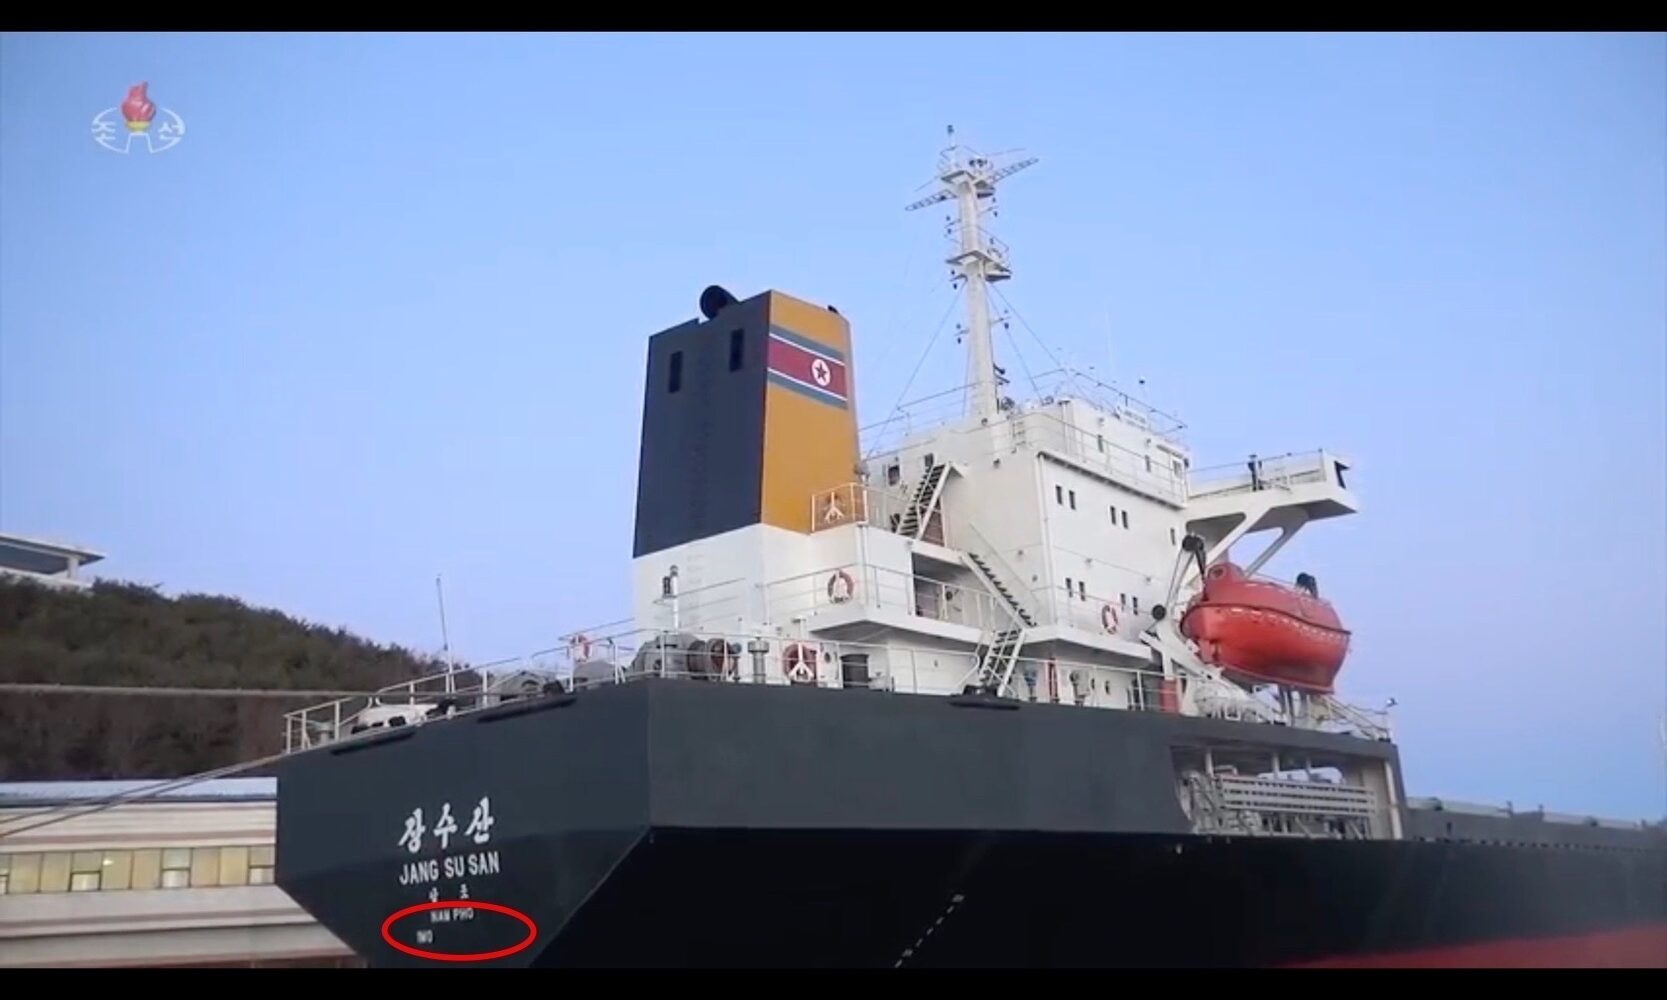 The Jang Su San lacks an IMO number on its stern (circled) | Image: KCTV (Dec. 24, 2021)